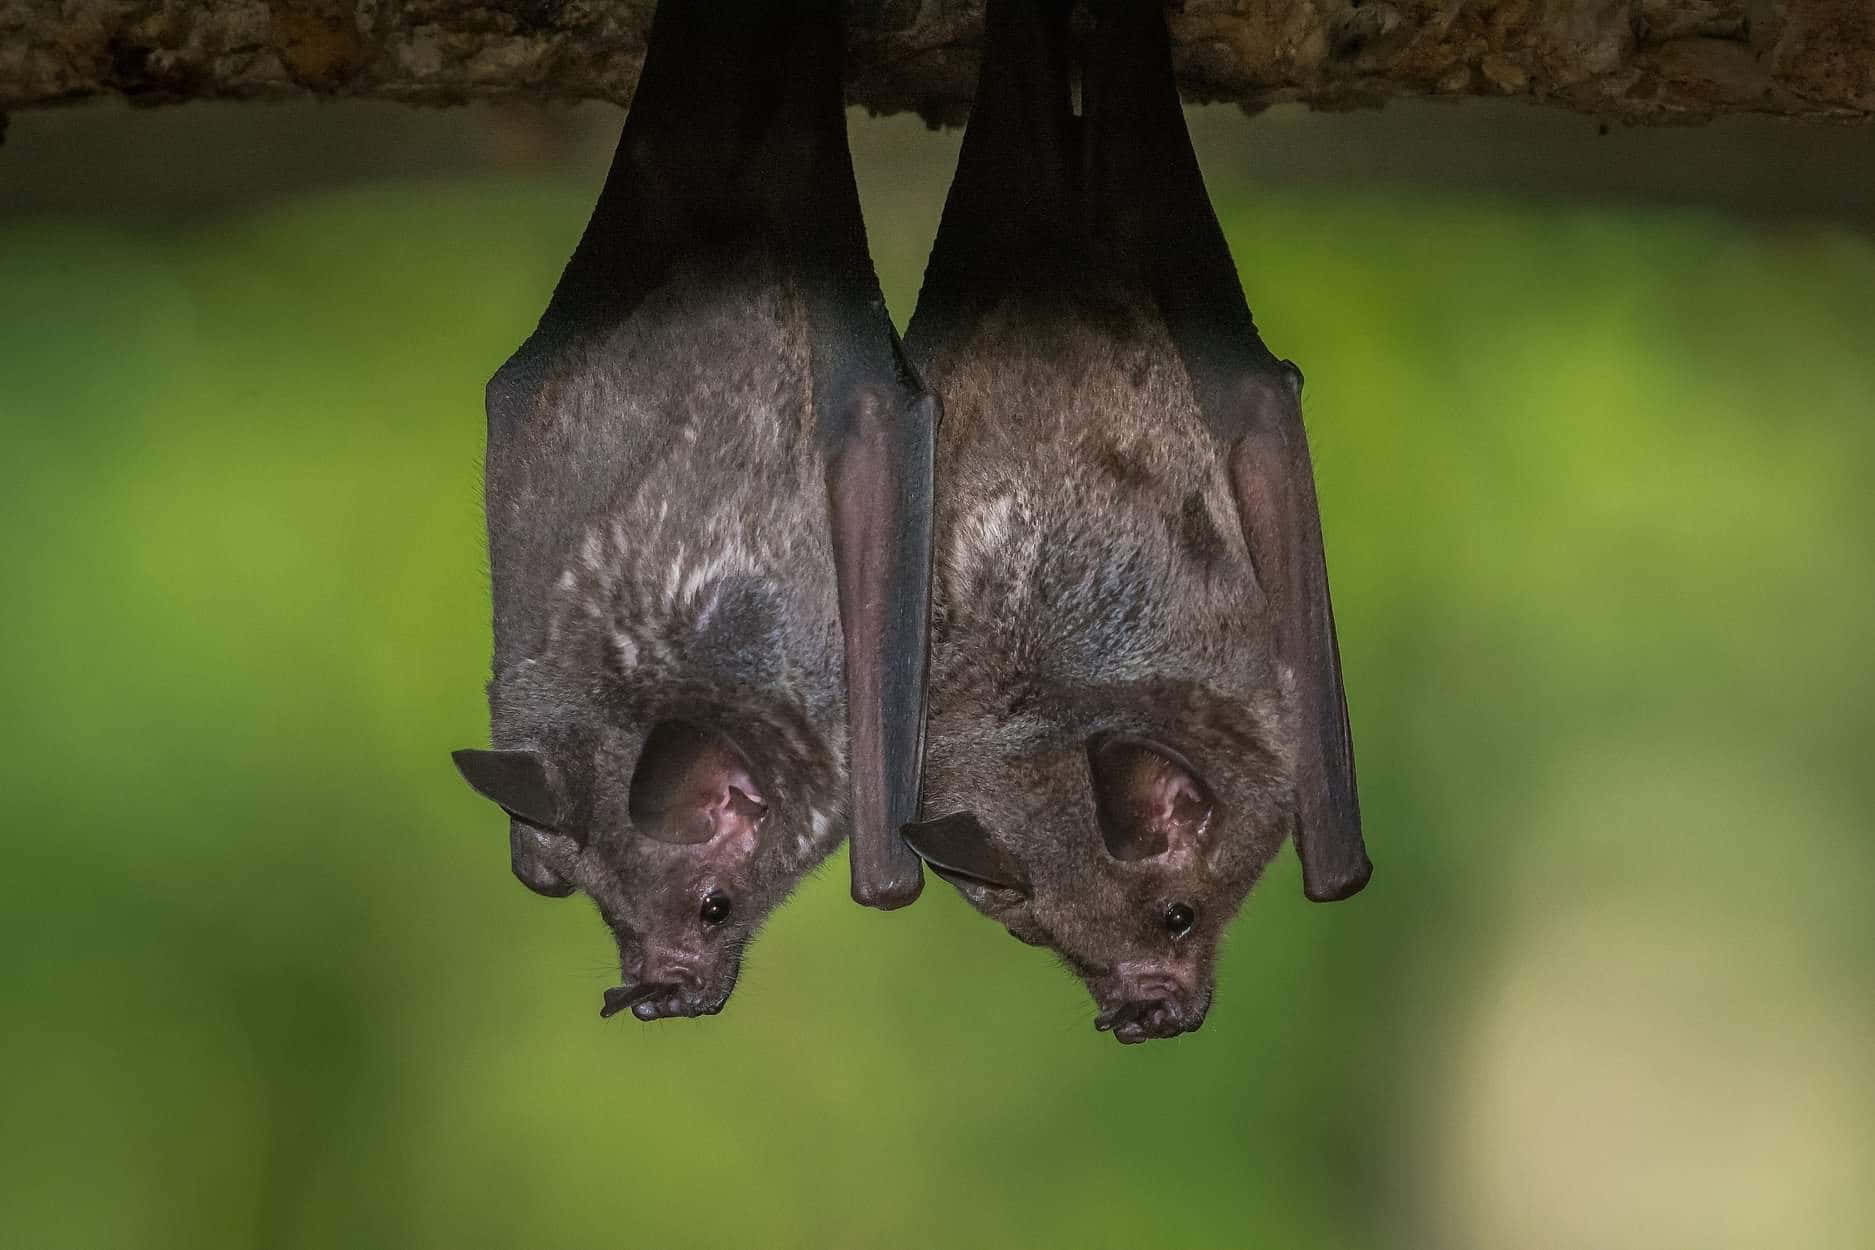 Incredible Close-Up View of Fruit Bats in Natural Habitat